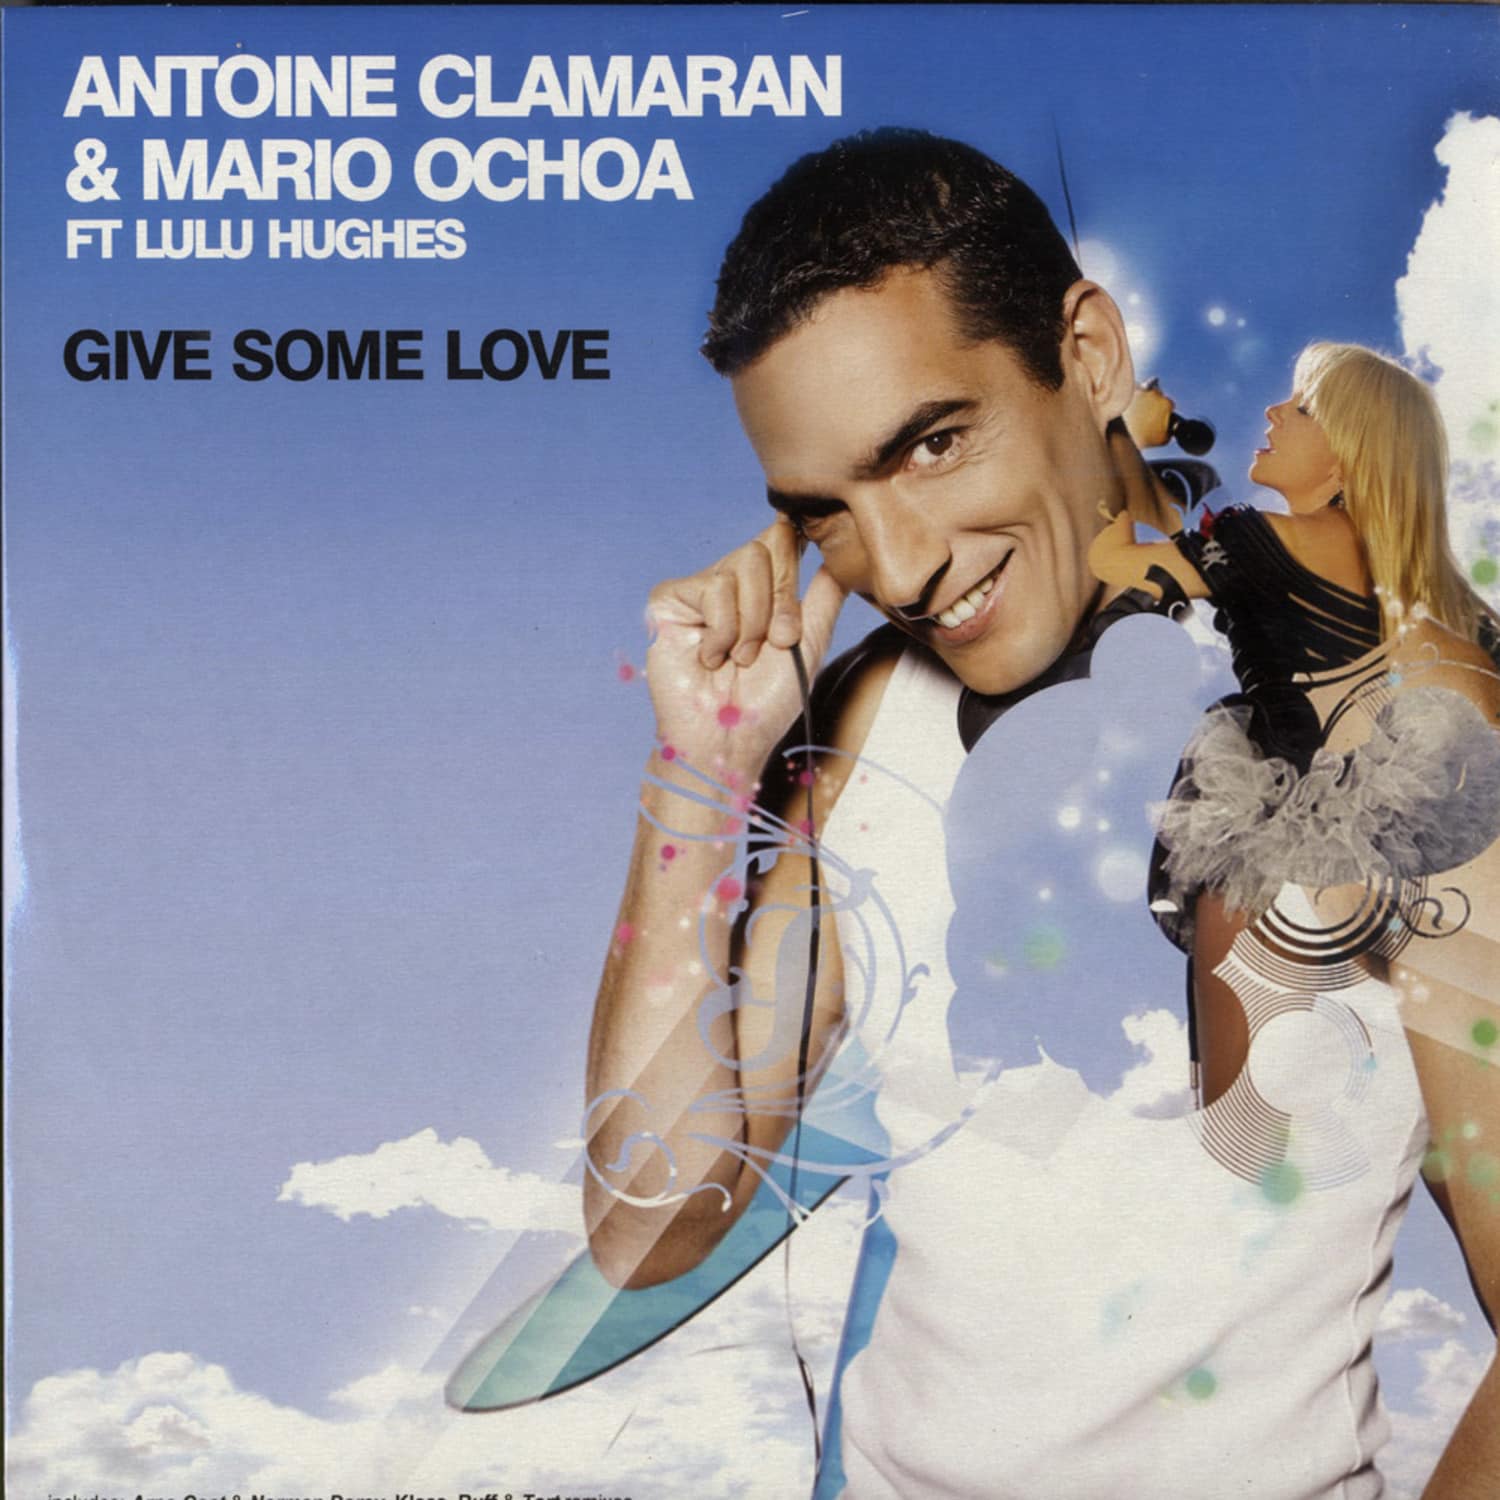 Antoine Clamaran & Mario Ochoa - GIVE SOME LOVE